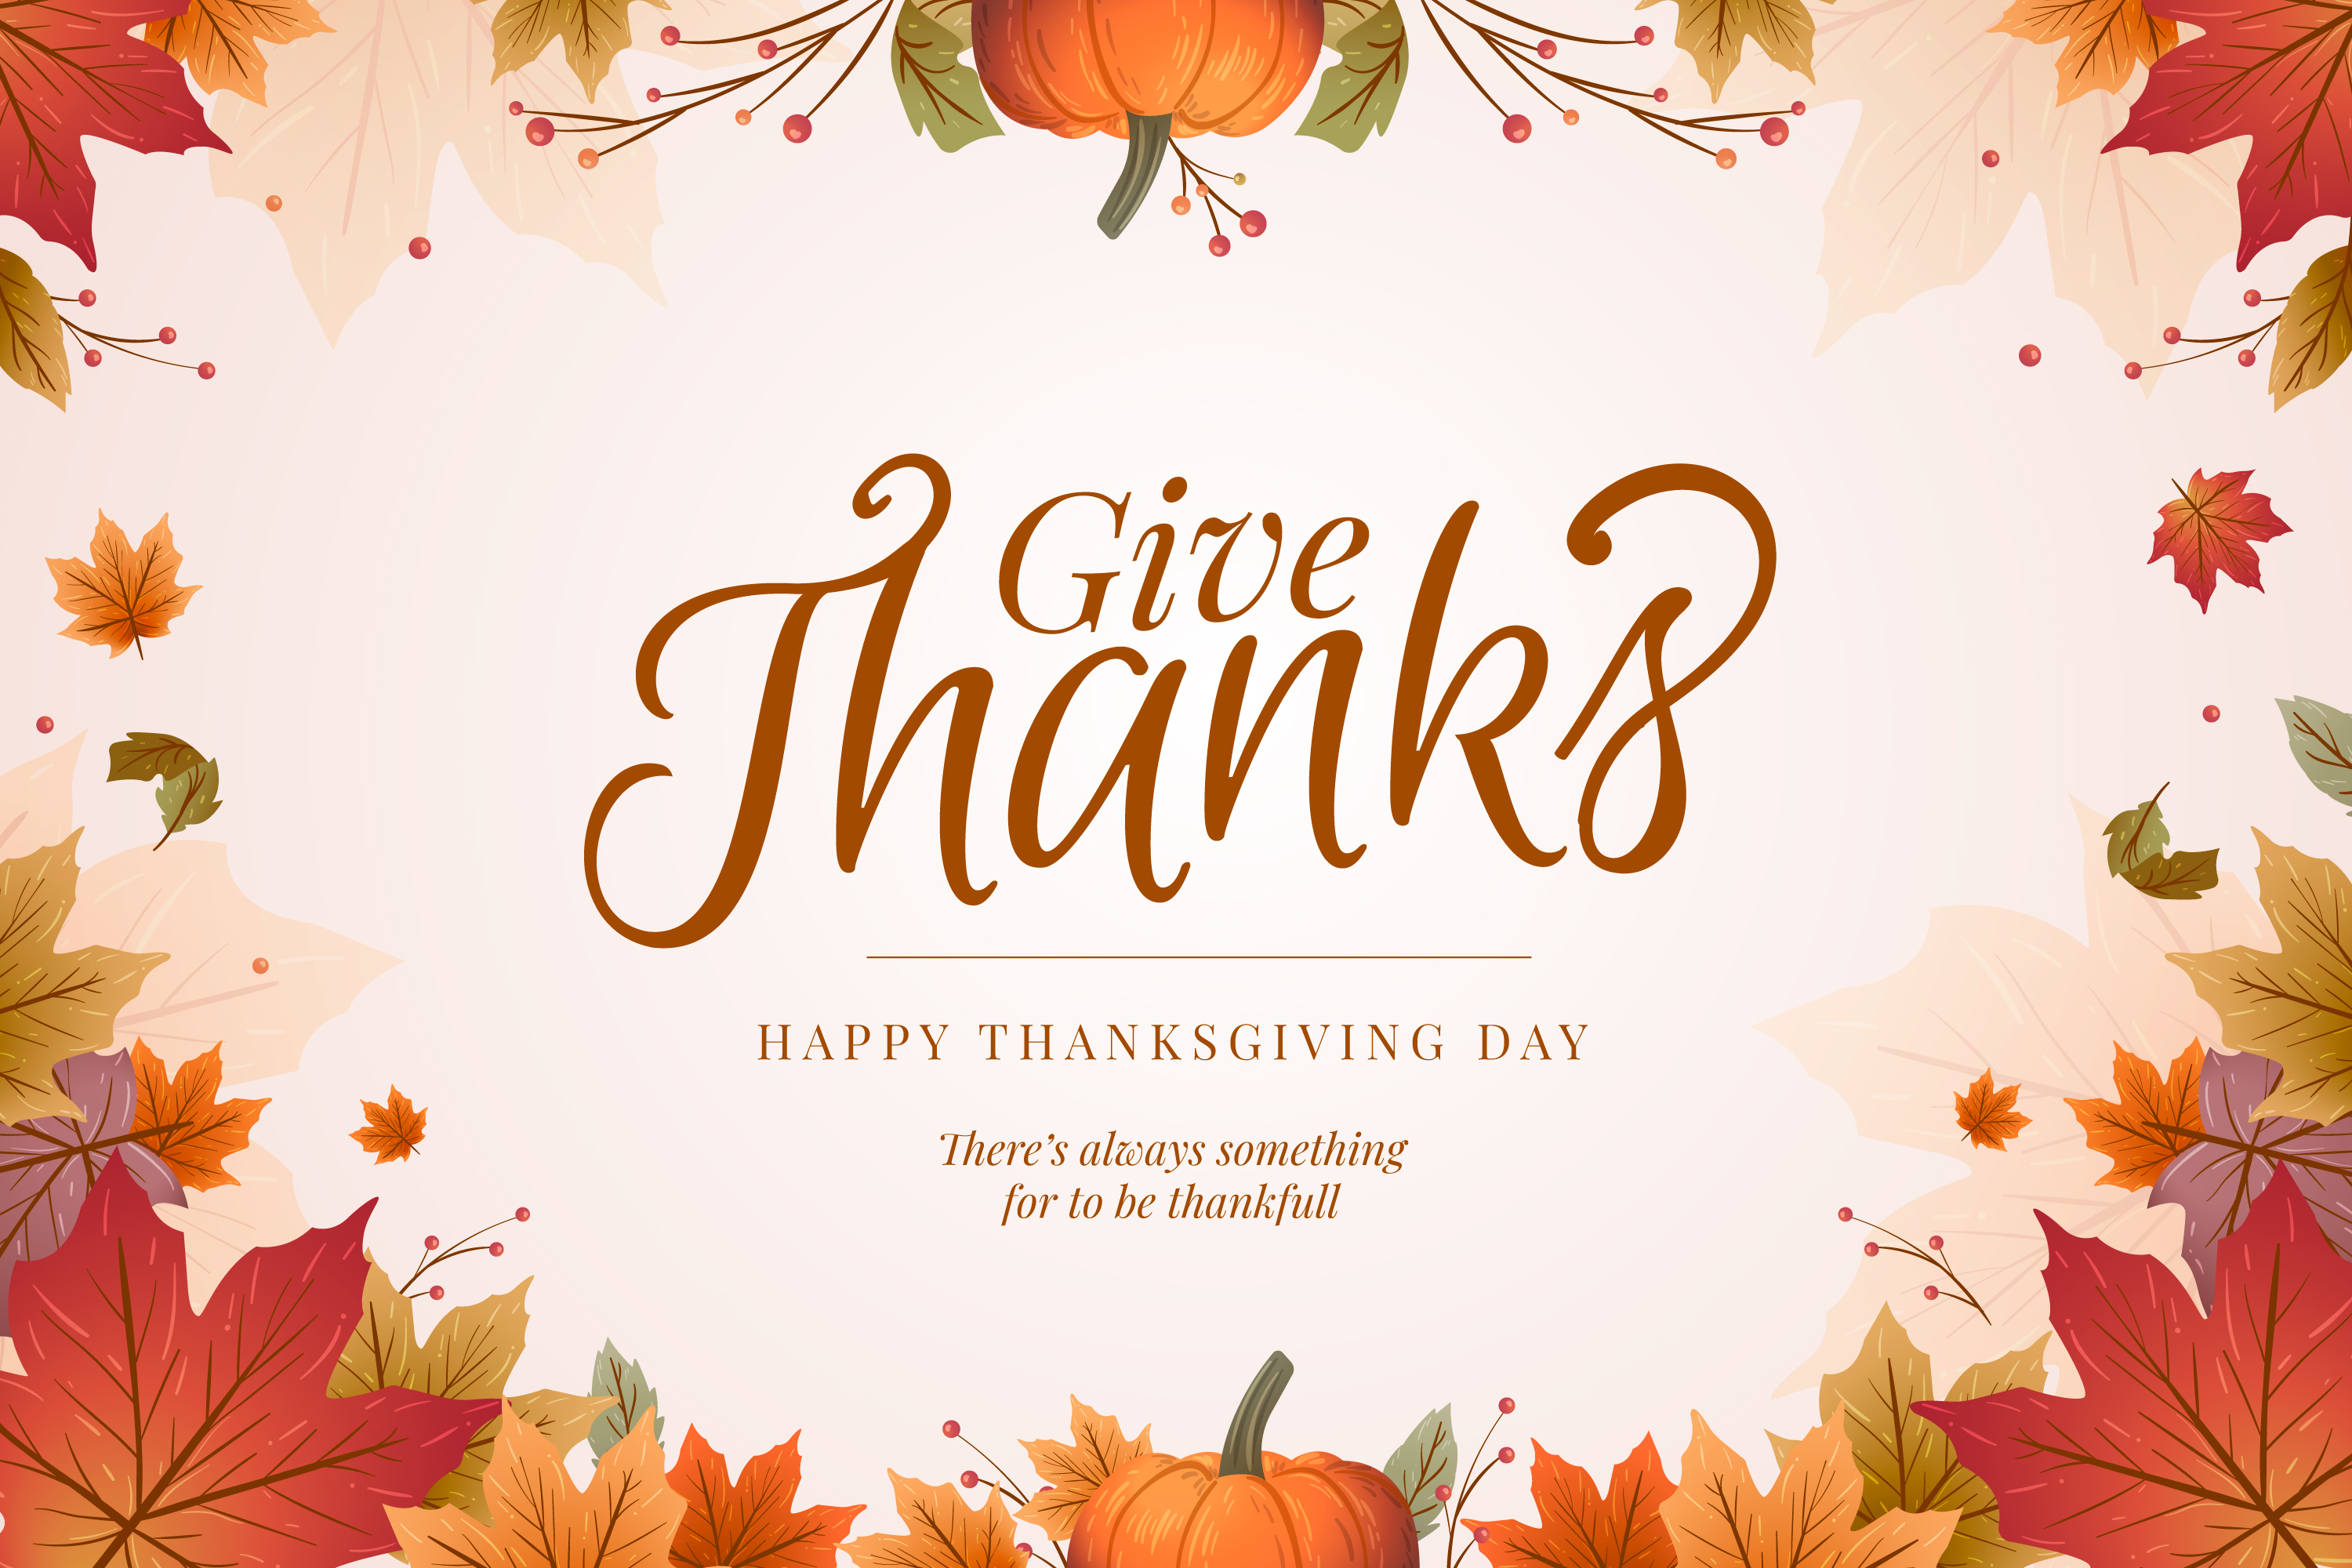 Happy Thanksgiving! - Intuit Accountants Community